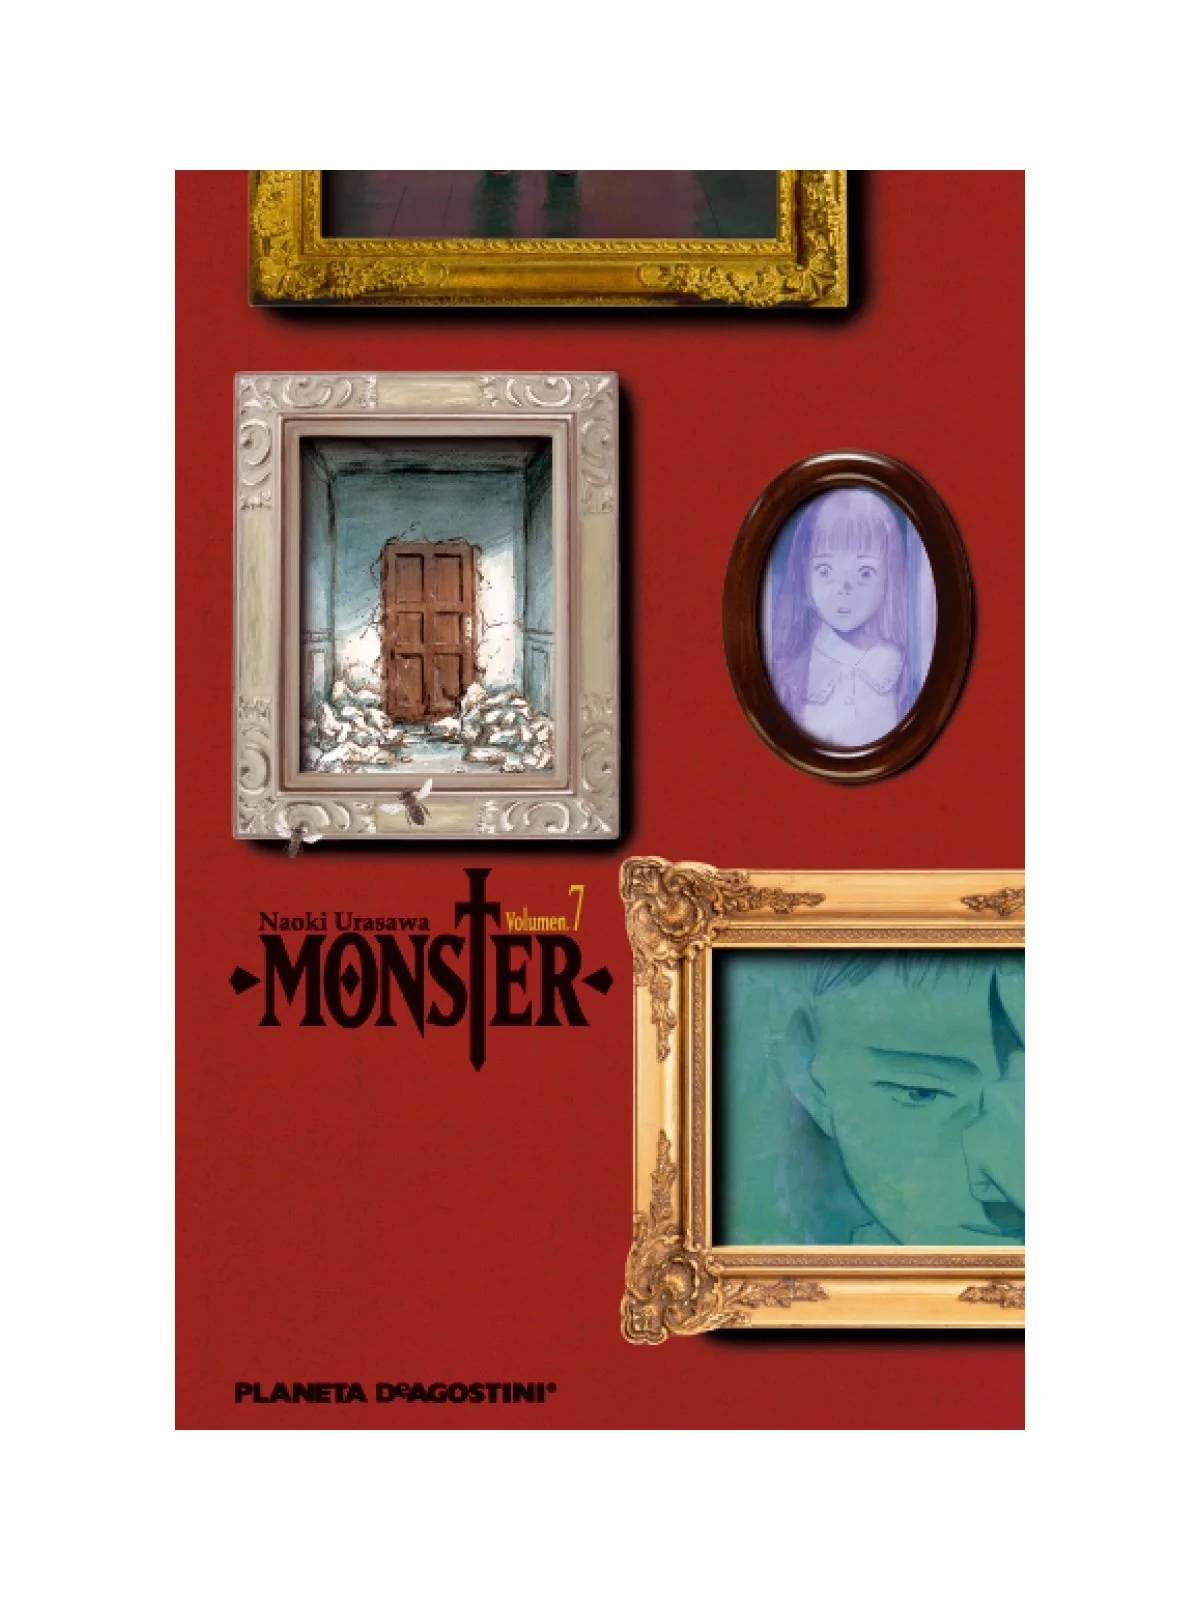 Comprar Monster Kanzenban Nº7 barato al mejor precio 15,16 € de PLANET